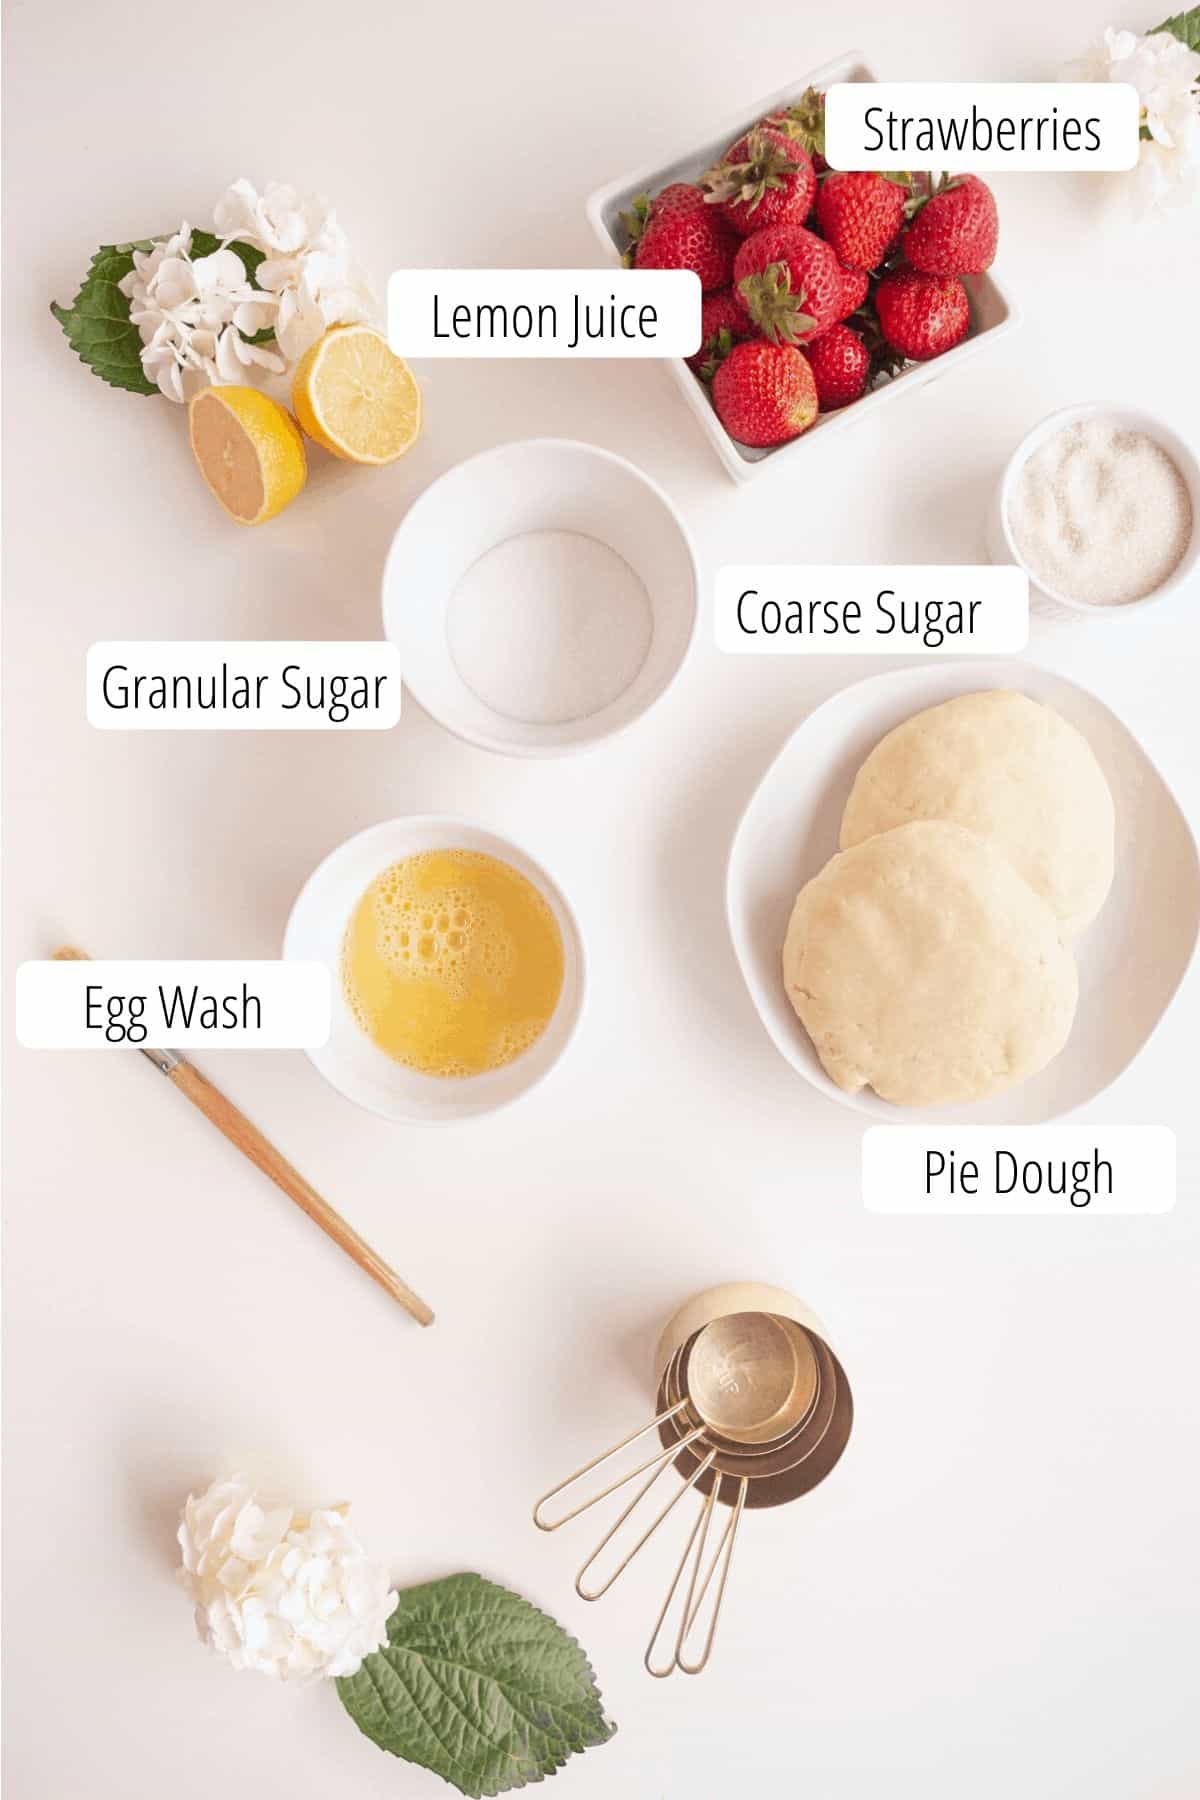 ingredients for strawberry pie, strawberries, pie dough, sugars, lemon, egg wash